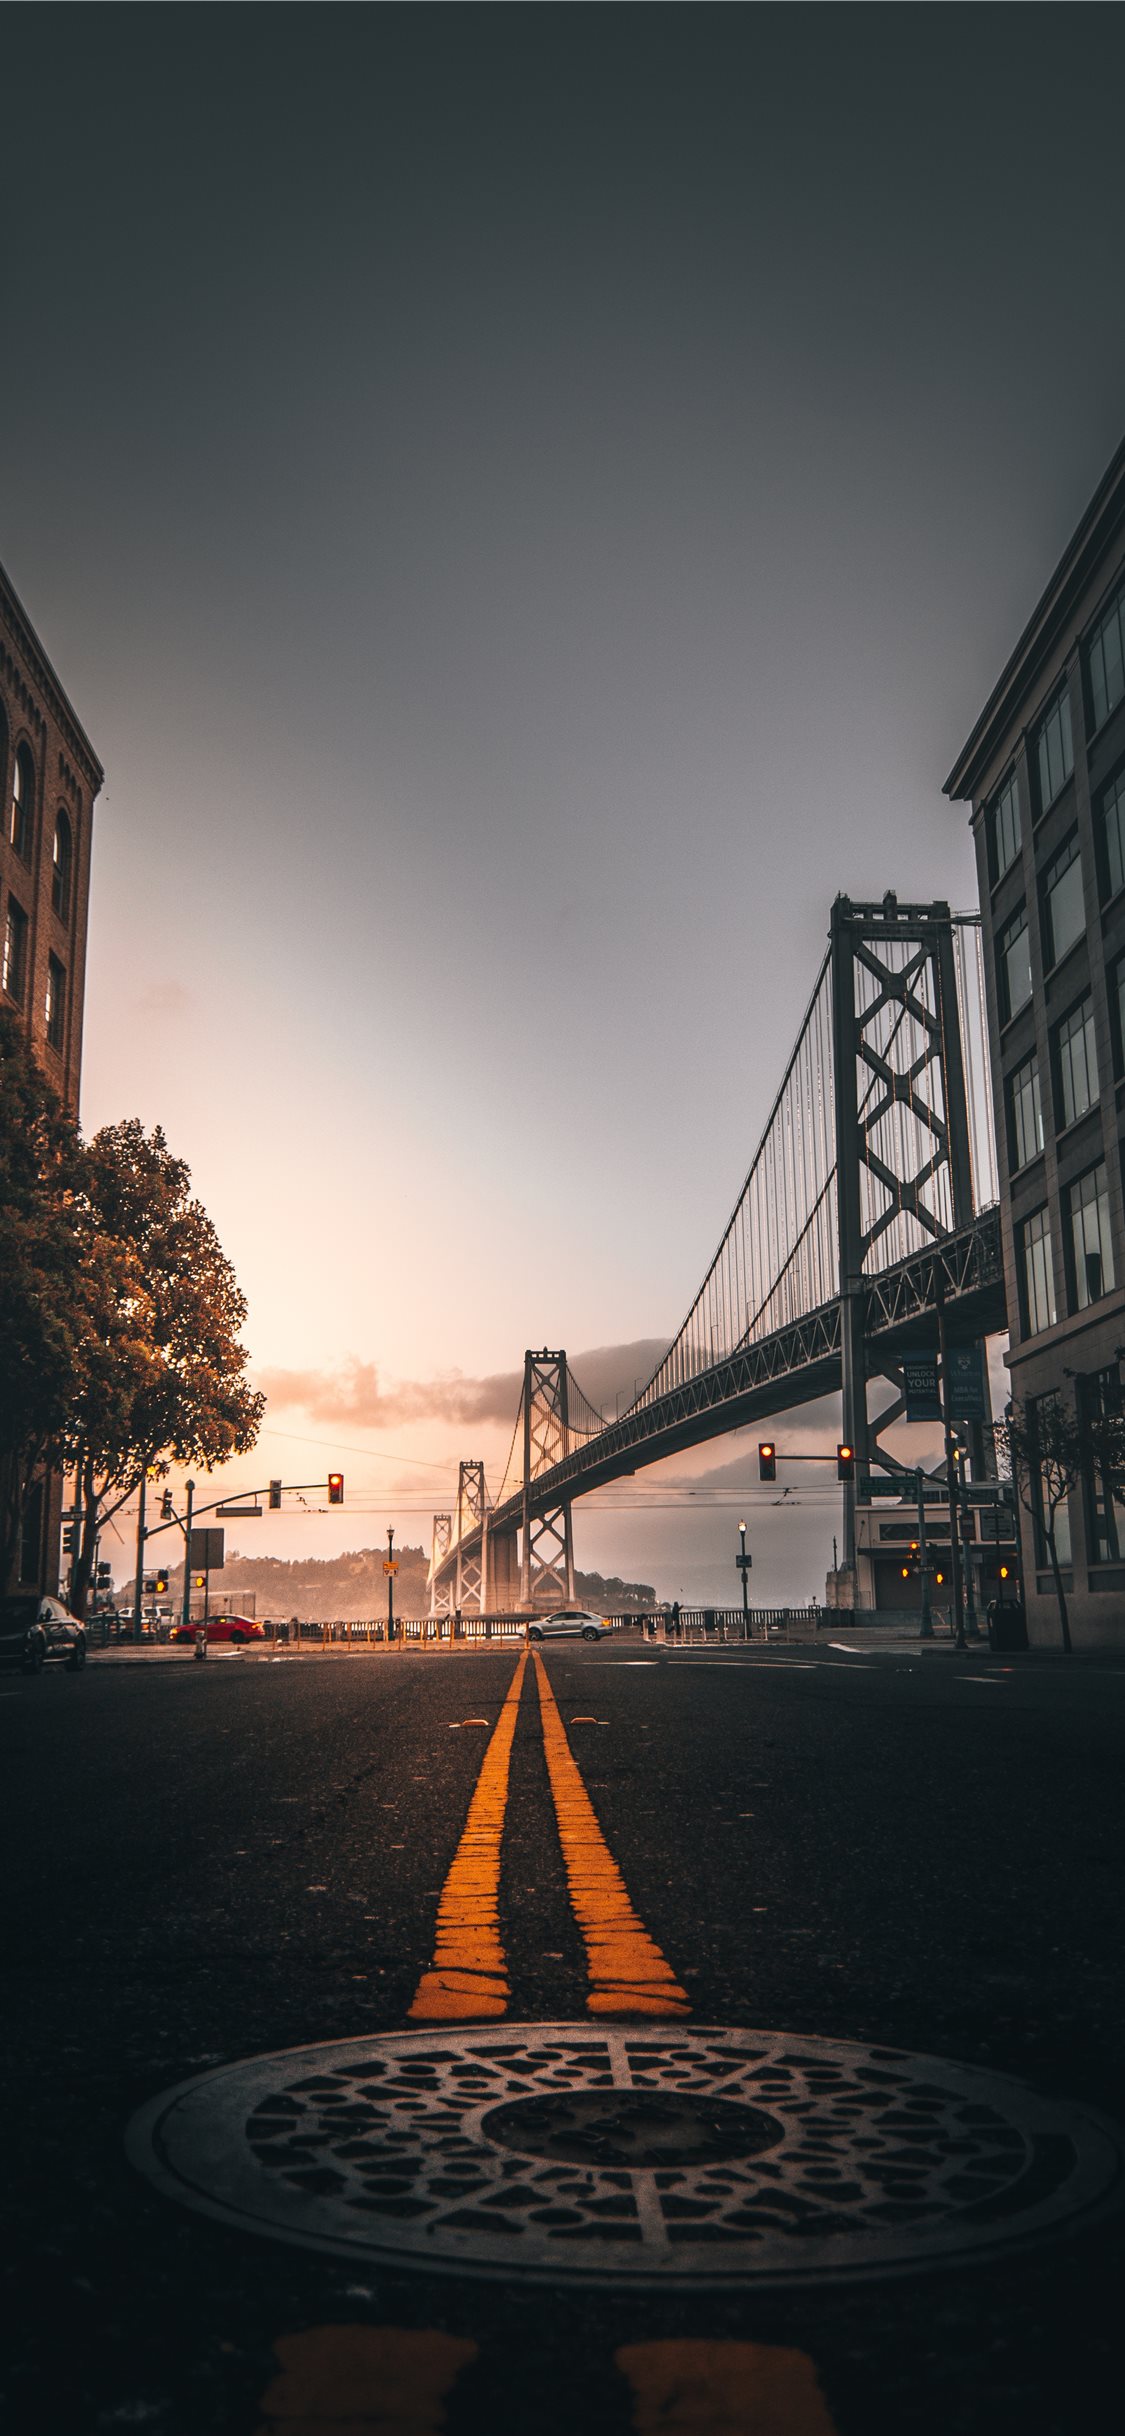 Golden Gate Bridge, Bridge, San Francisco background | Download Free images